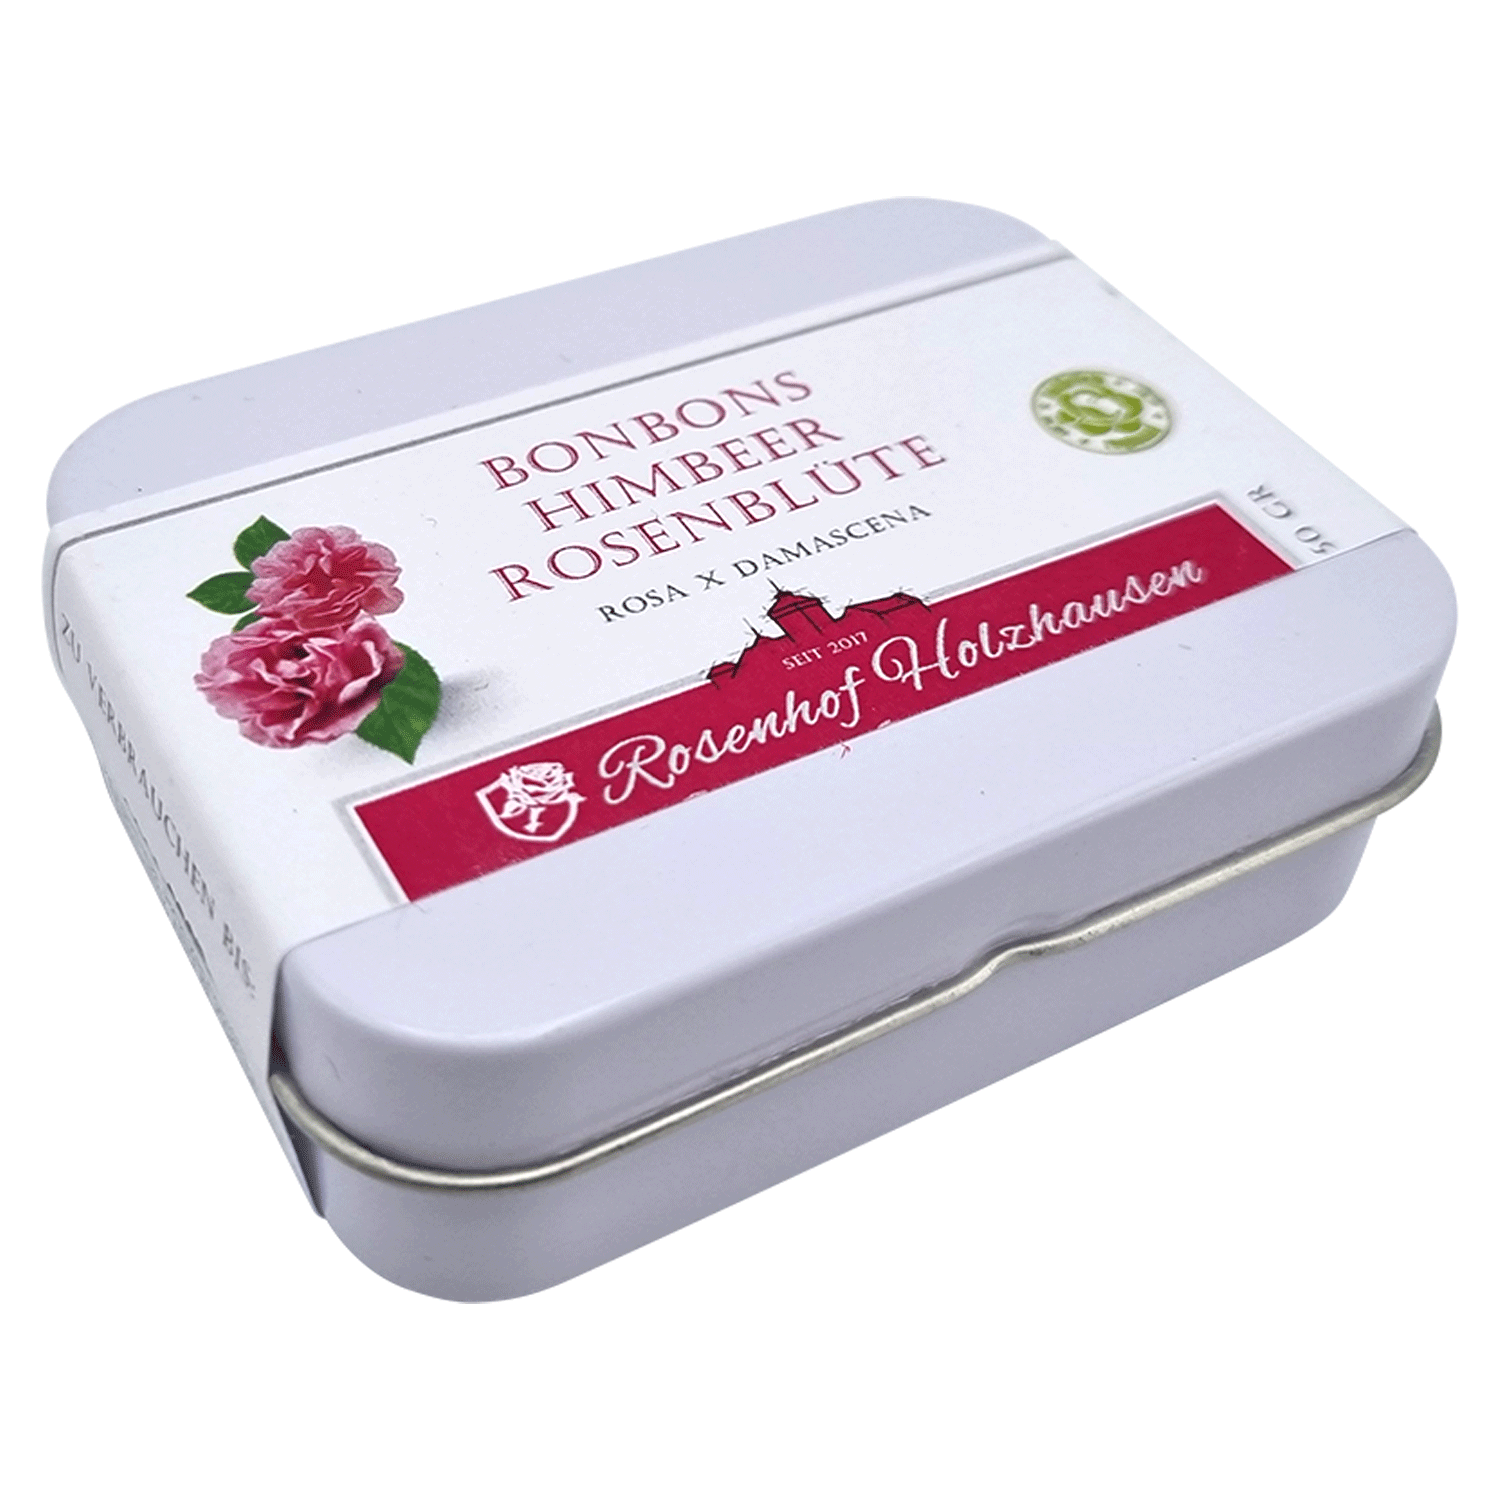 Bonbons - Himbeere-Rosenblüte